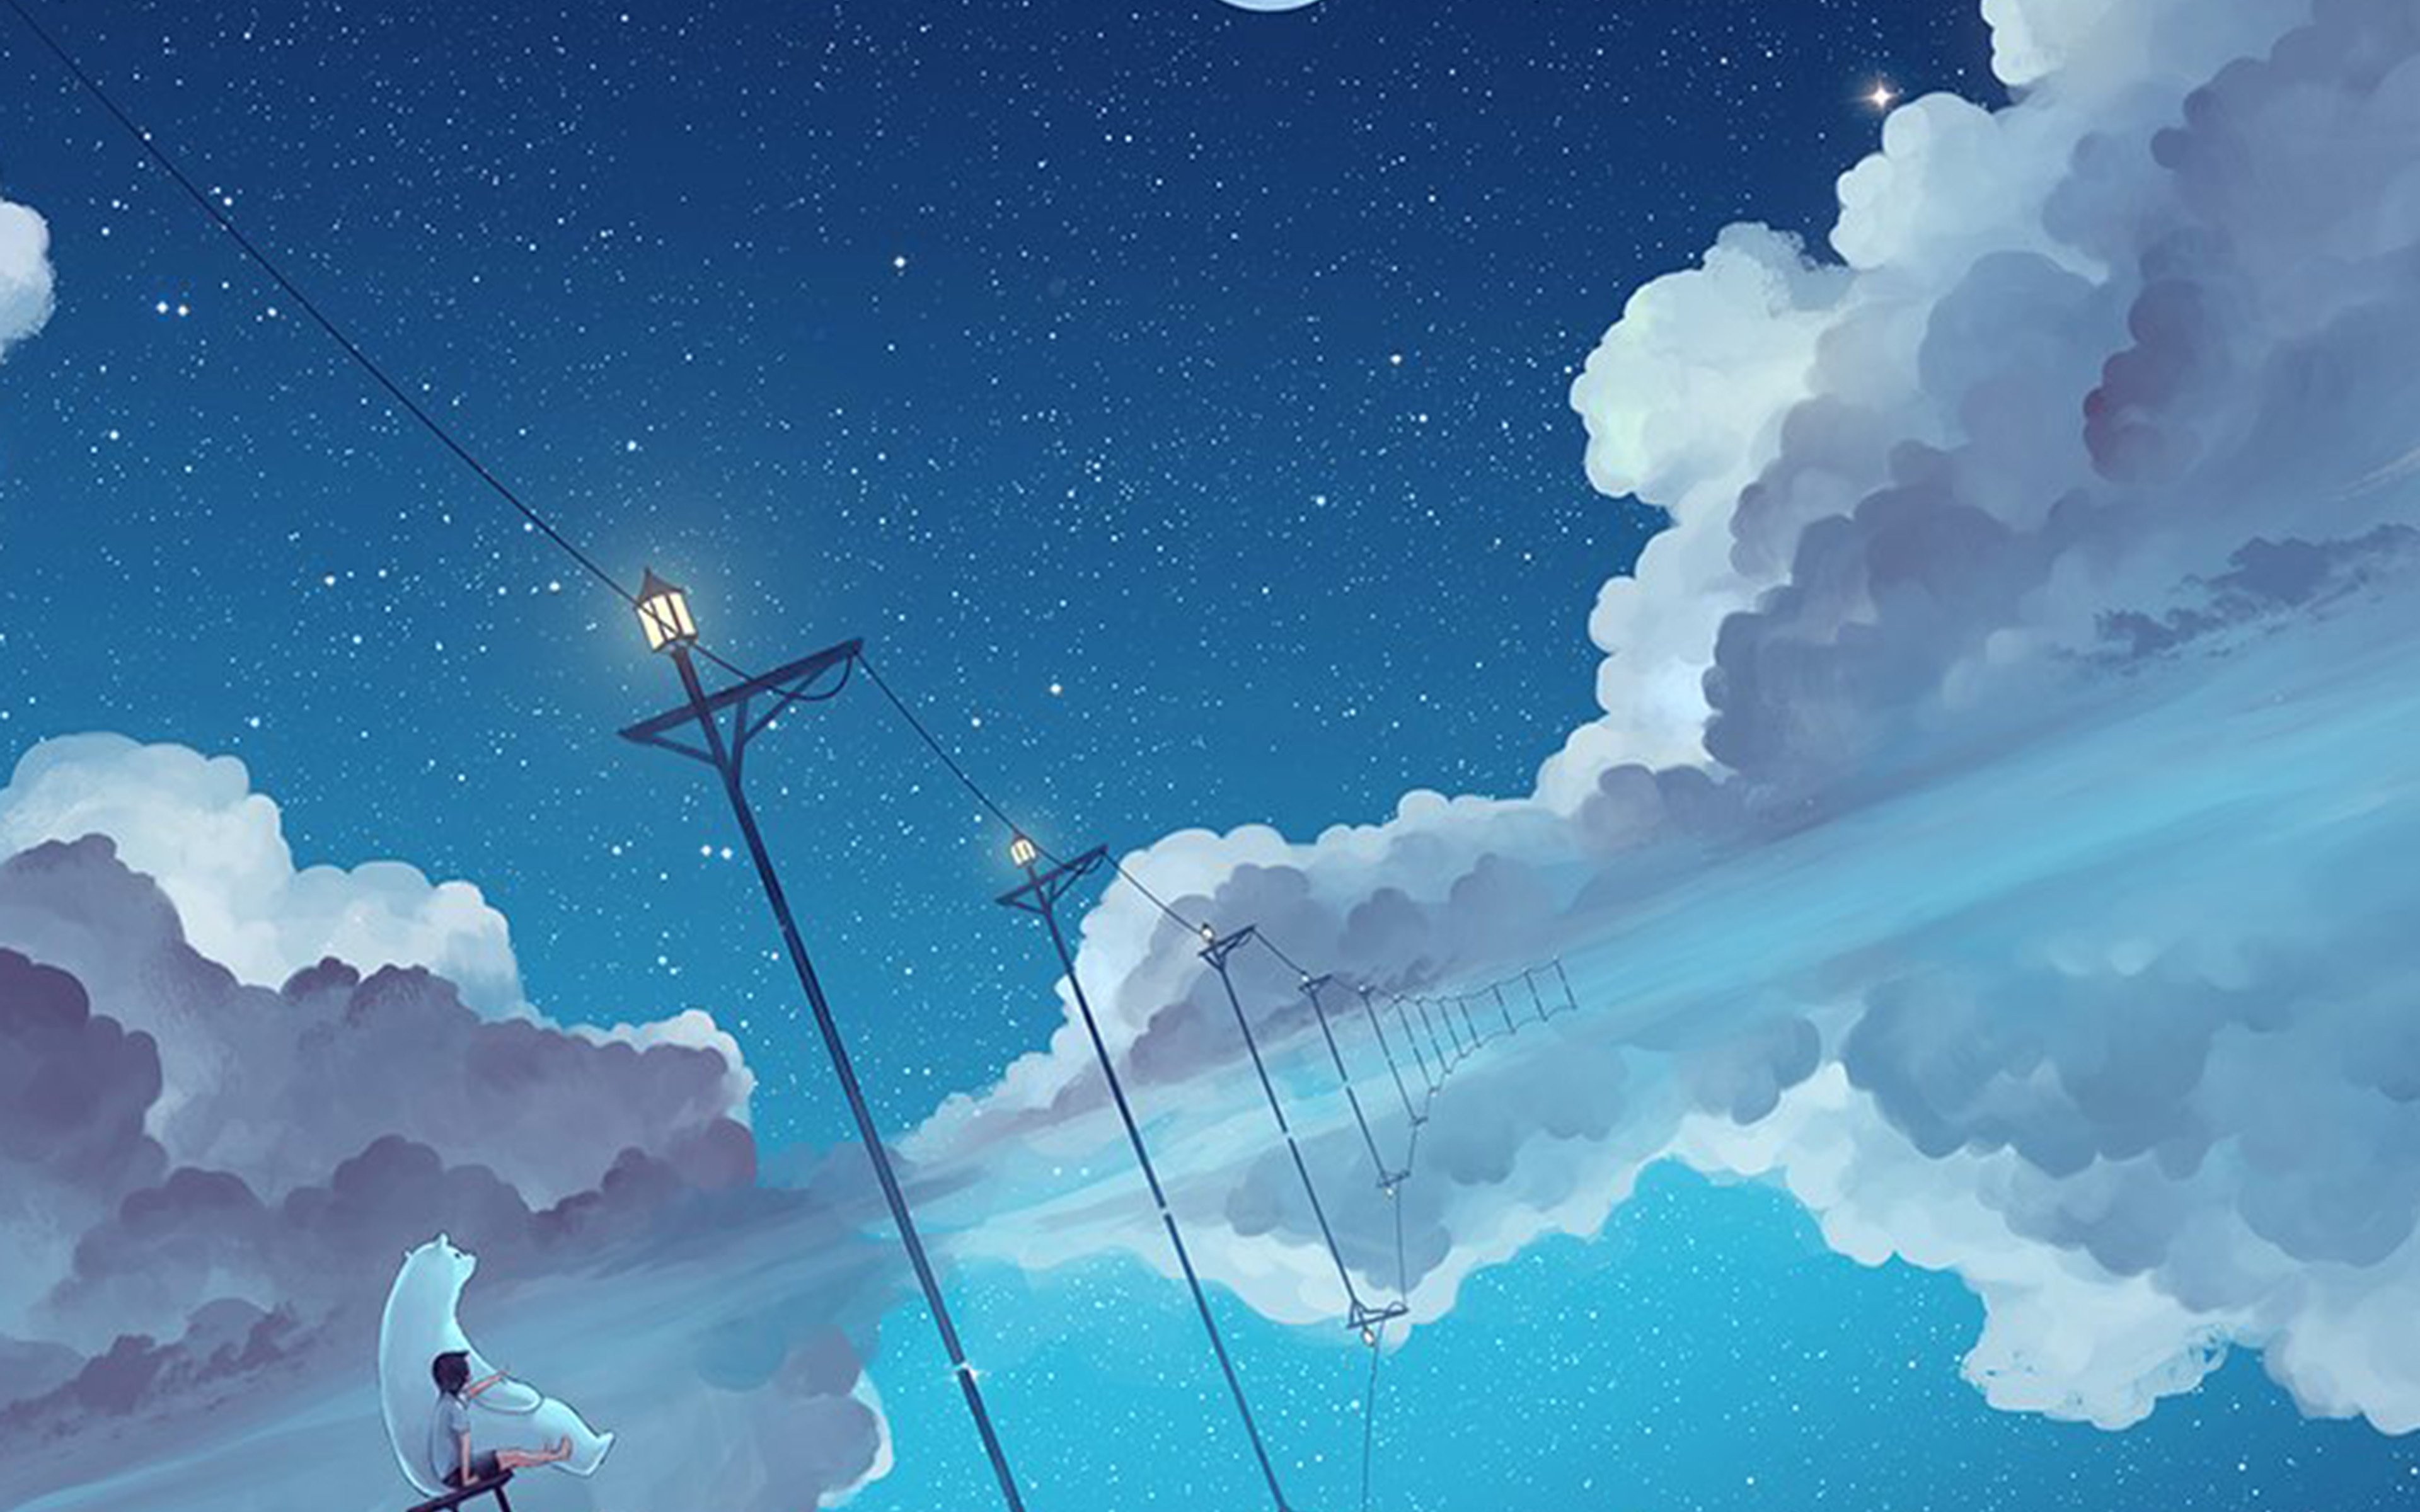 wallpaper for desktop, laptop. illust star moon sky night art